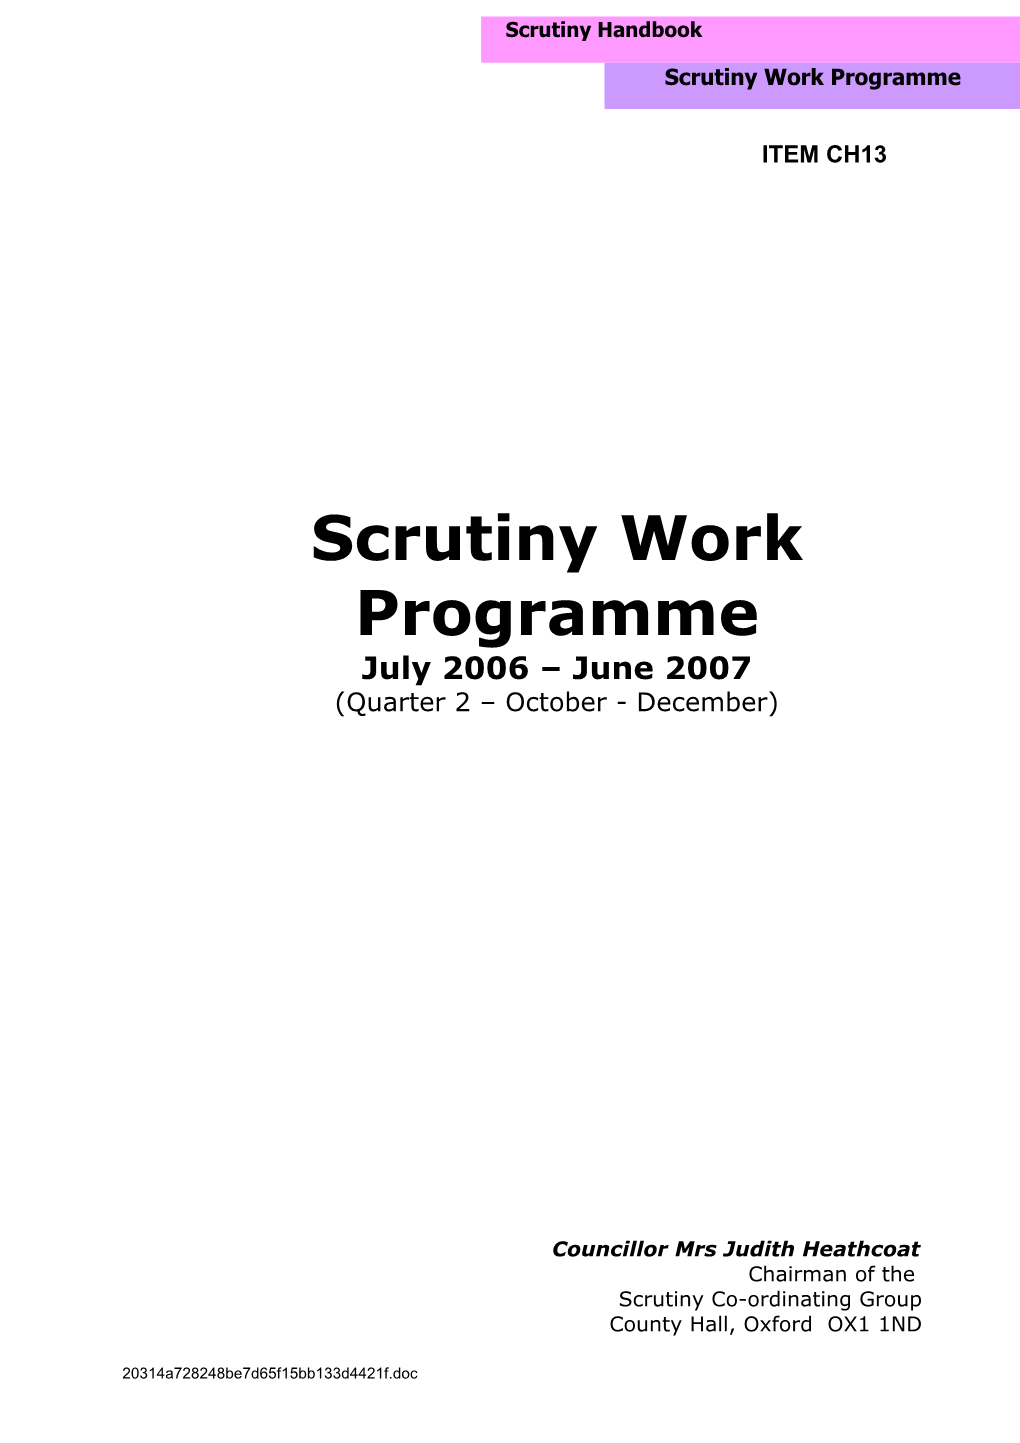 Scrutiny S Work Programme: Introduction